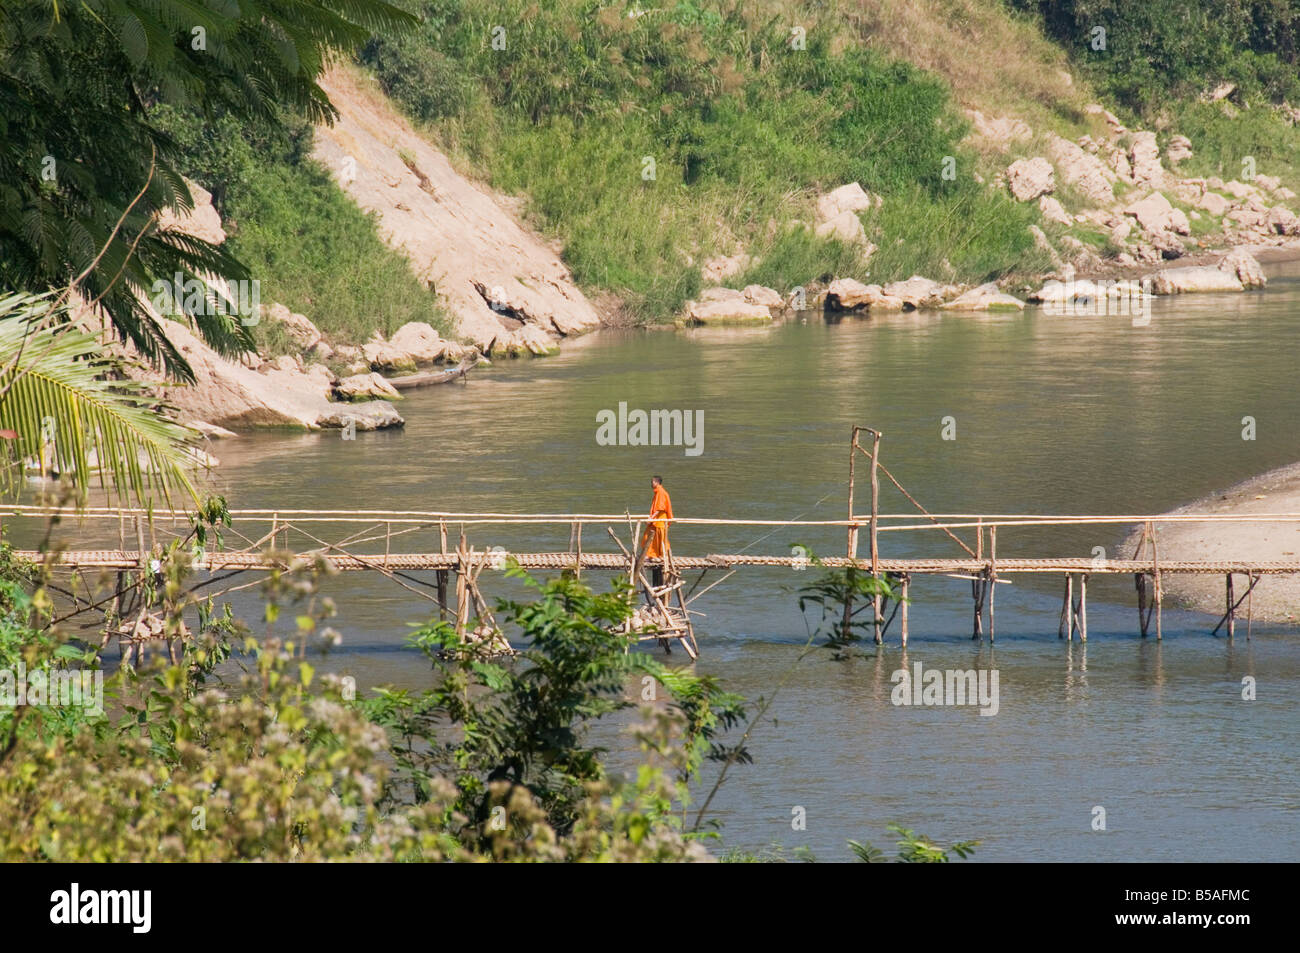 Khan fiume, a Luang Prabang, Laos, Indocina, sud-est asiatico Foto Stock